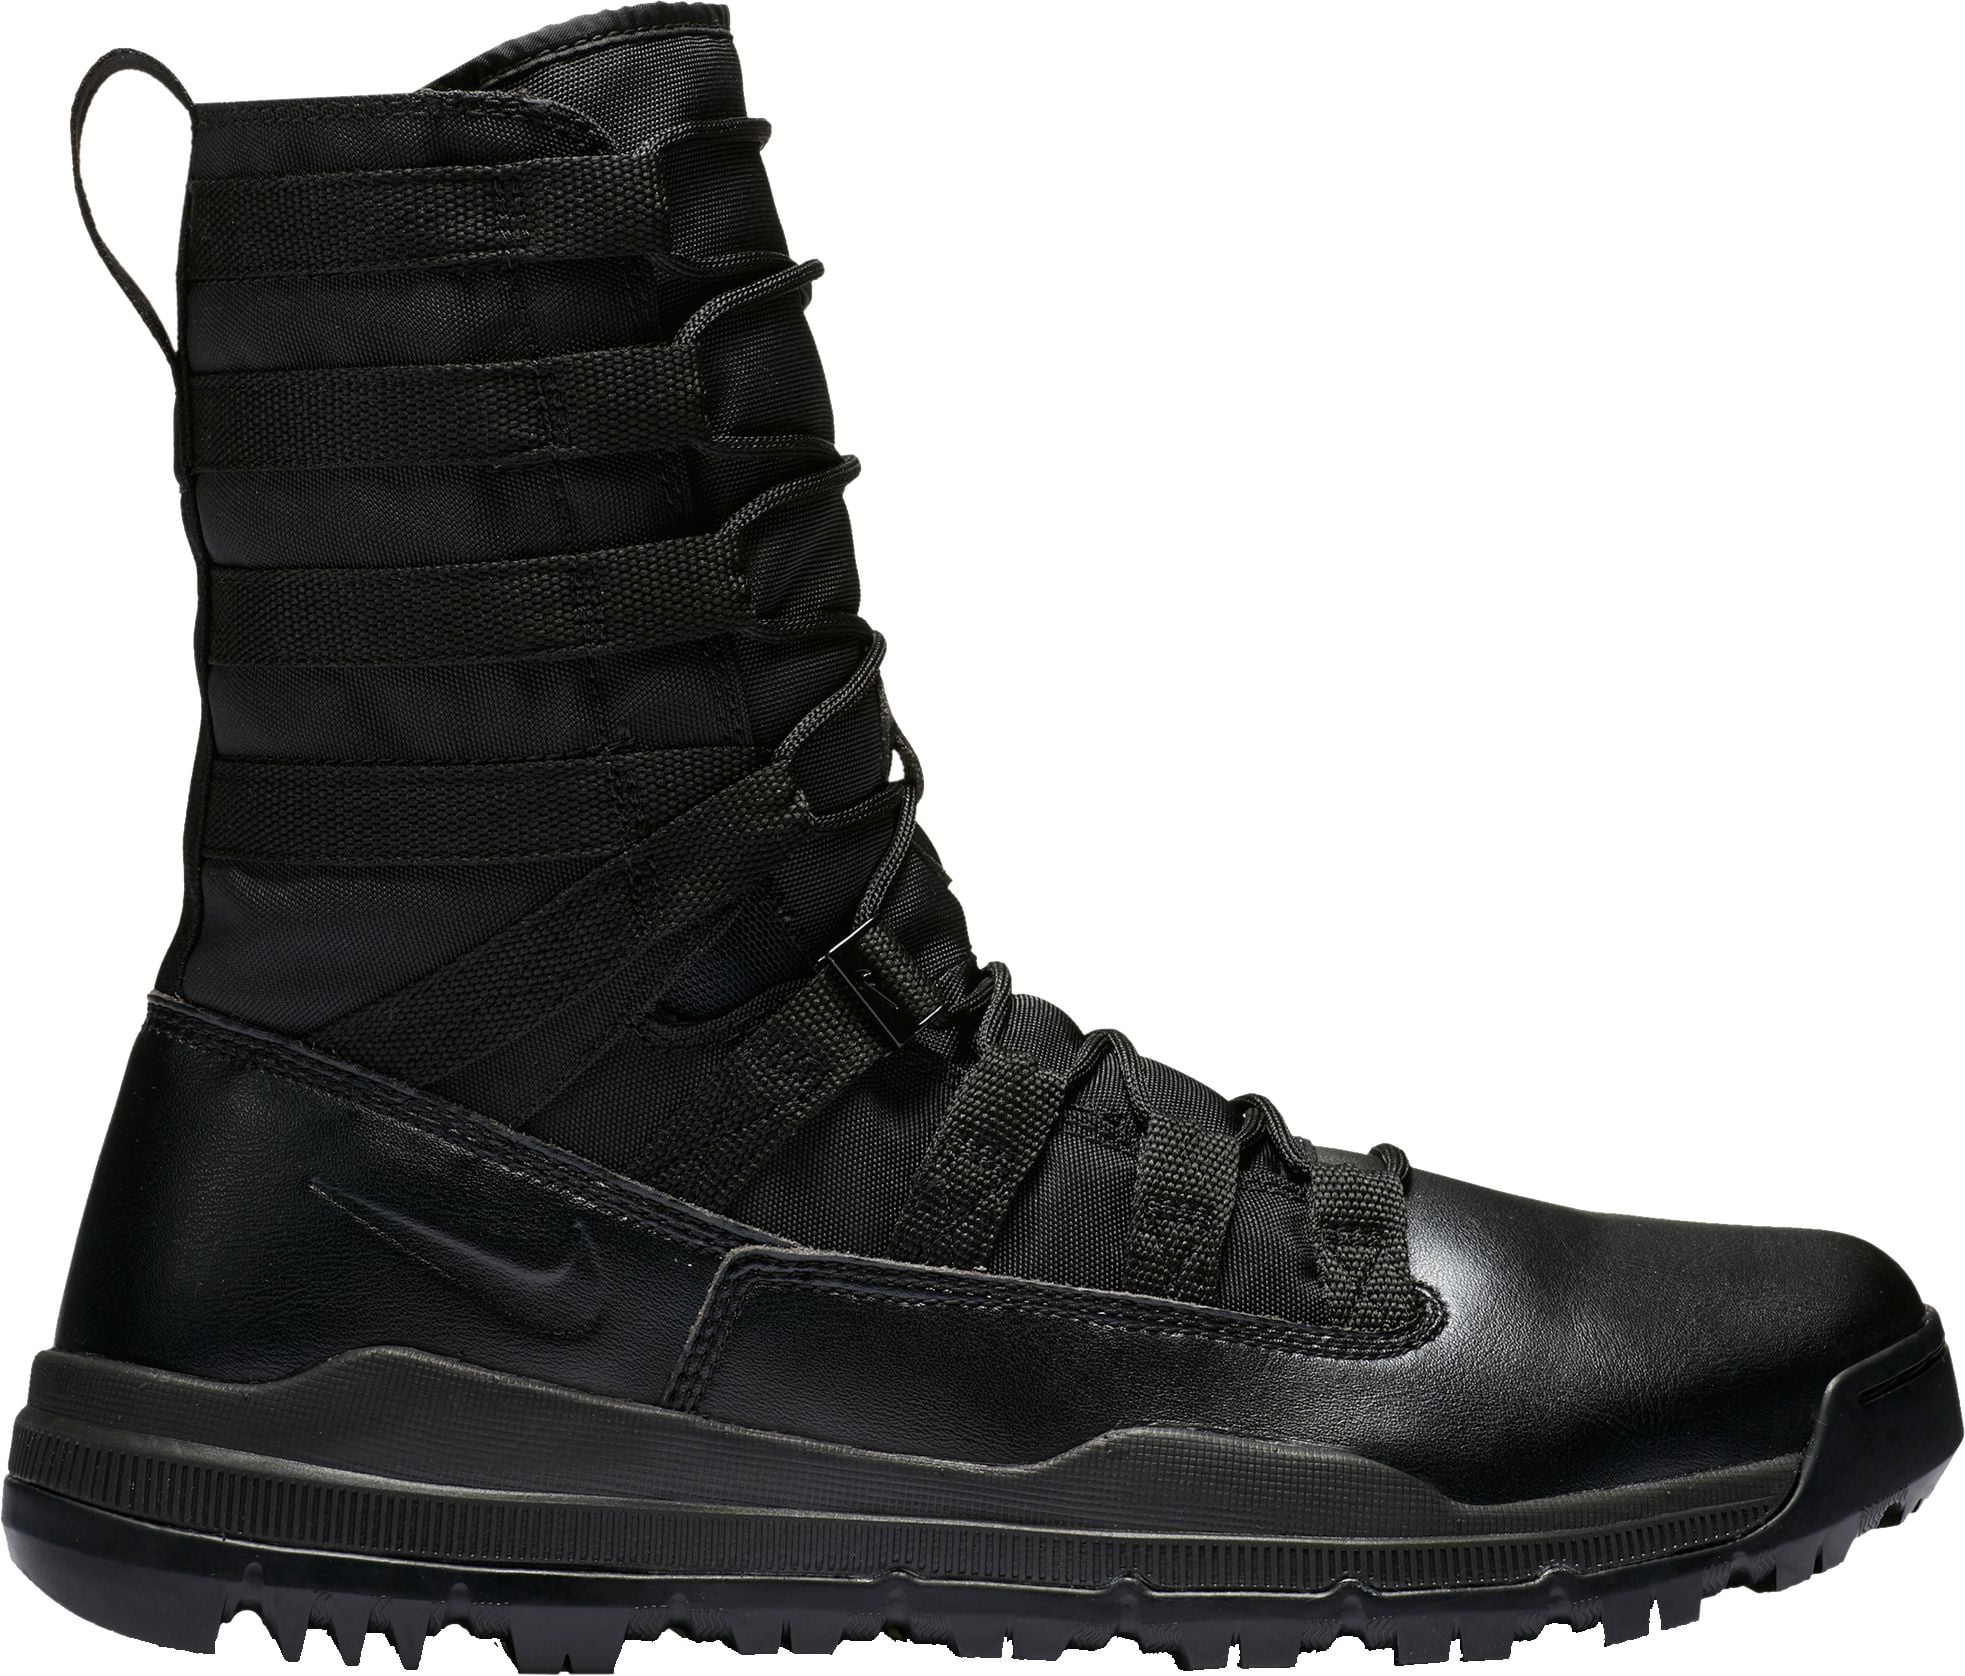 Nike Nike Men's SFB Gen 2 8'' Tactical Boots, Black, 12